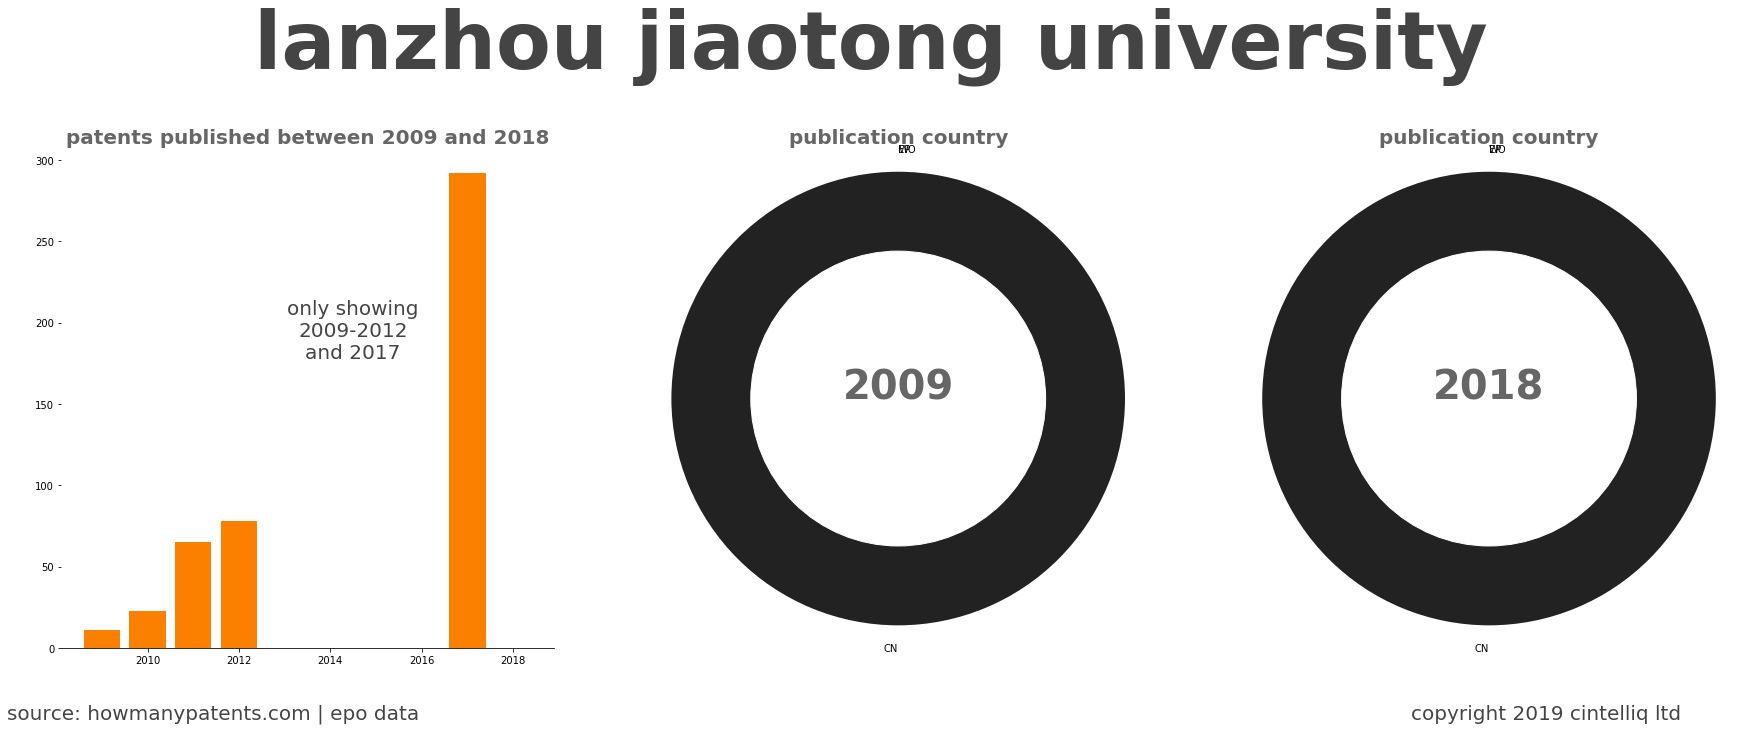 summary of patents for Lanzhou Jiaotong University